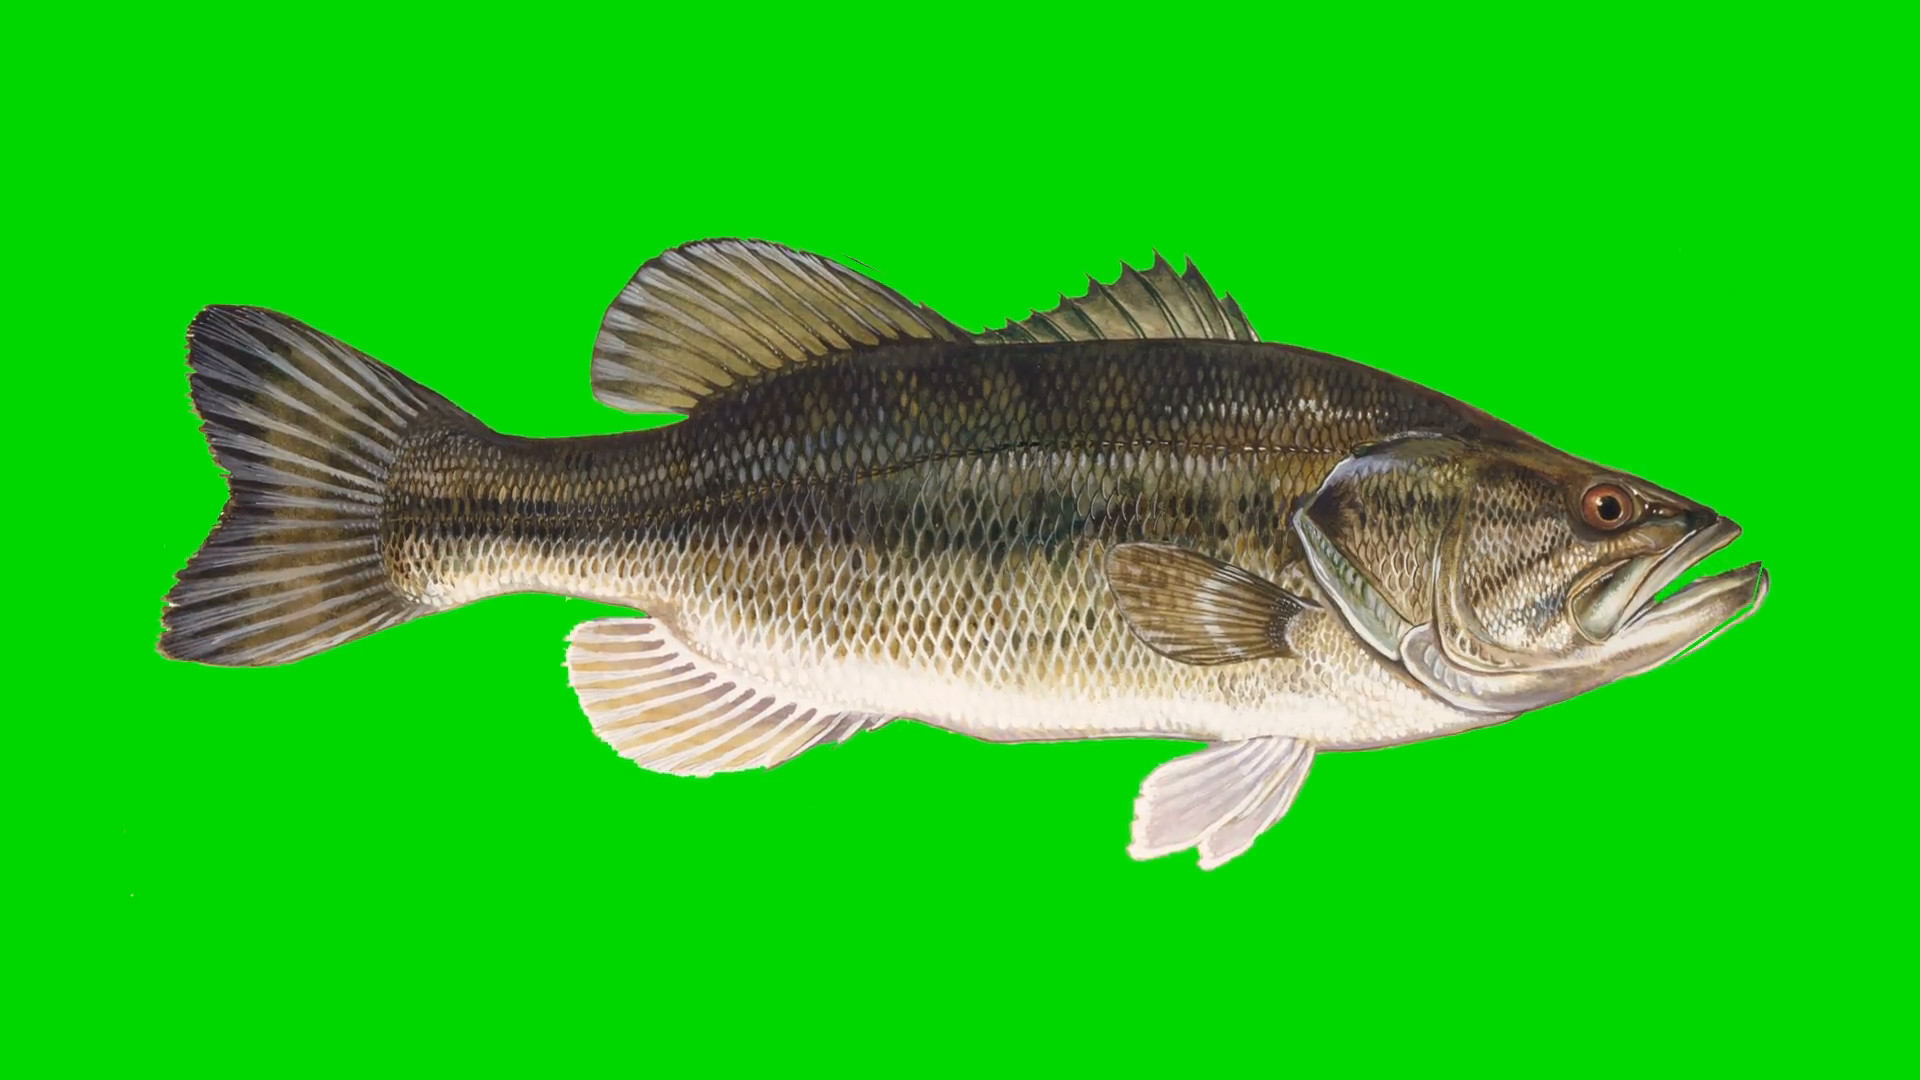 1920x1080 Beautiful Illustration of Bass Fish Swimming on a Green Screen Background  Motion Background - VideoBlocks